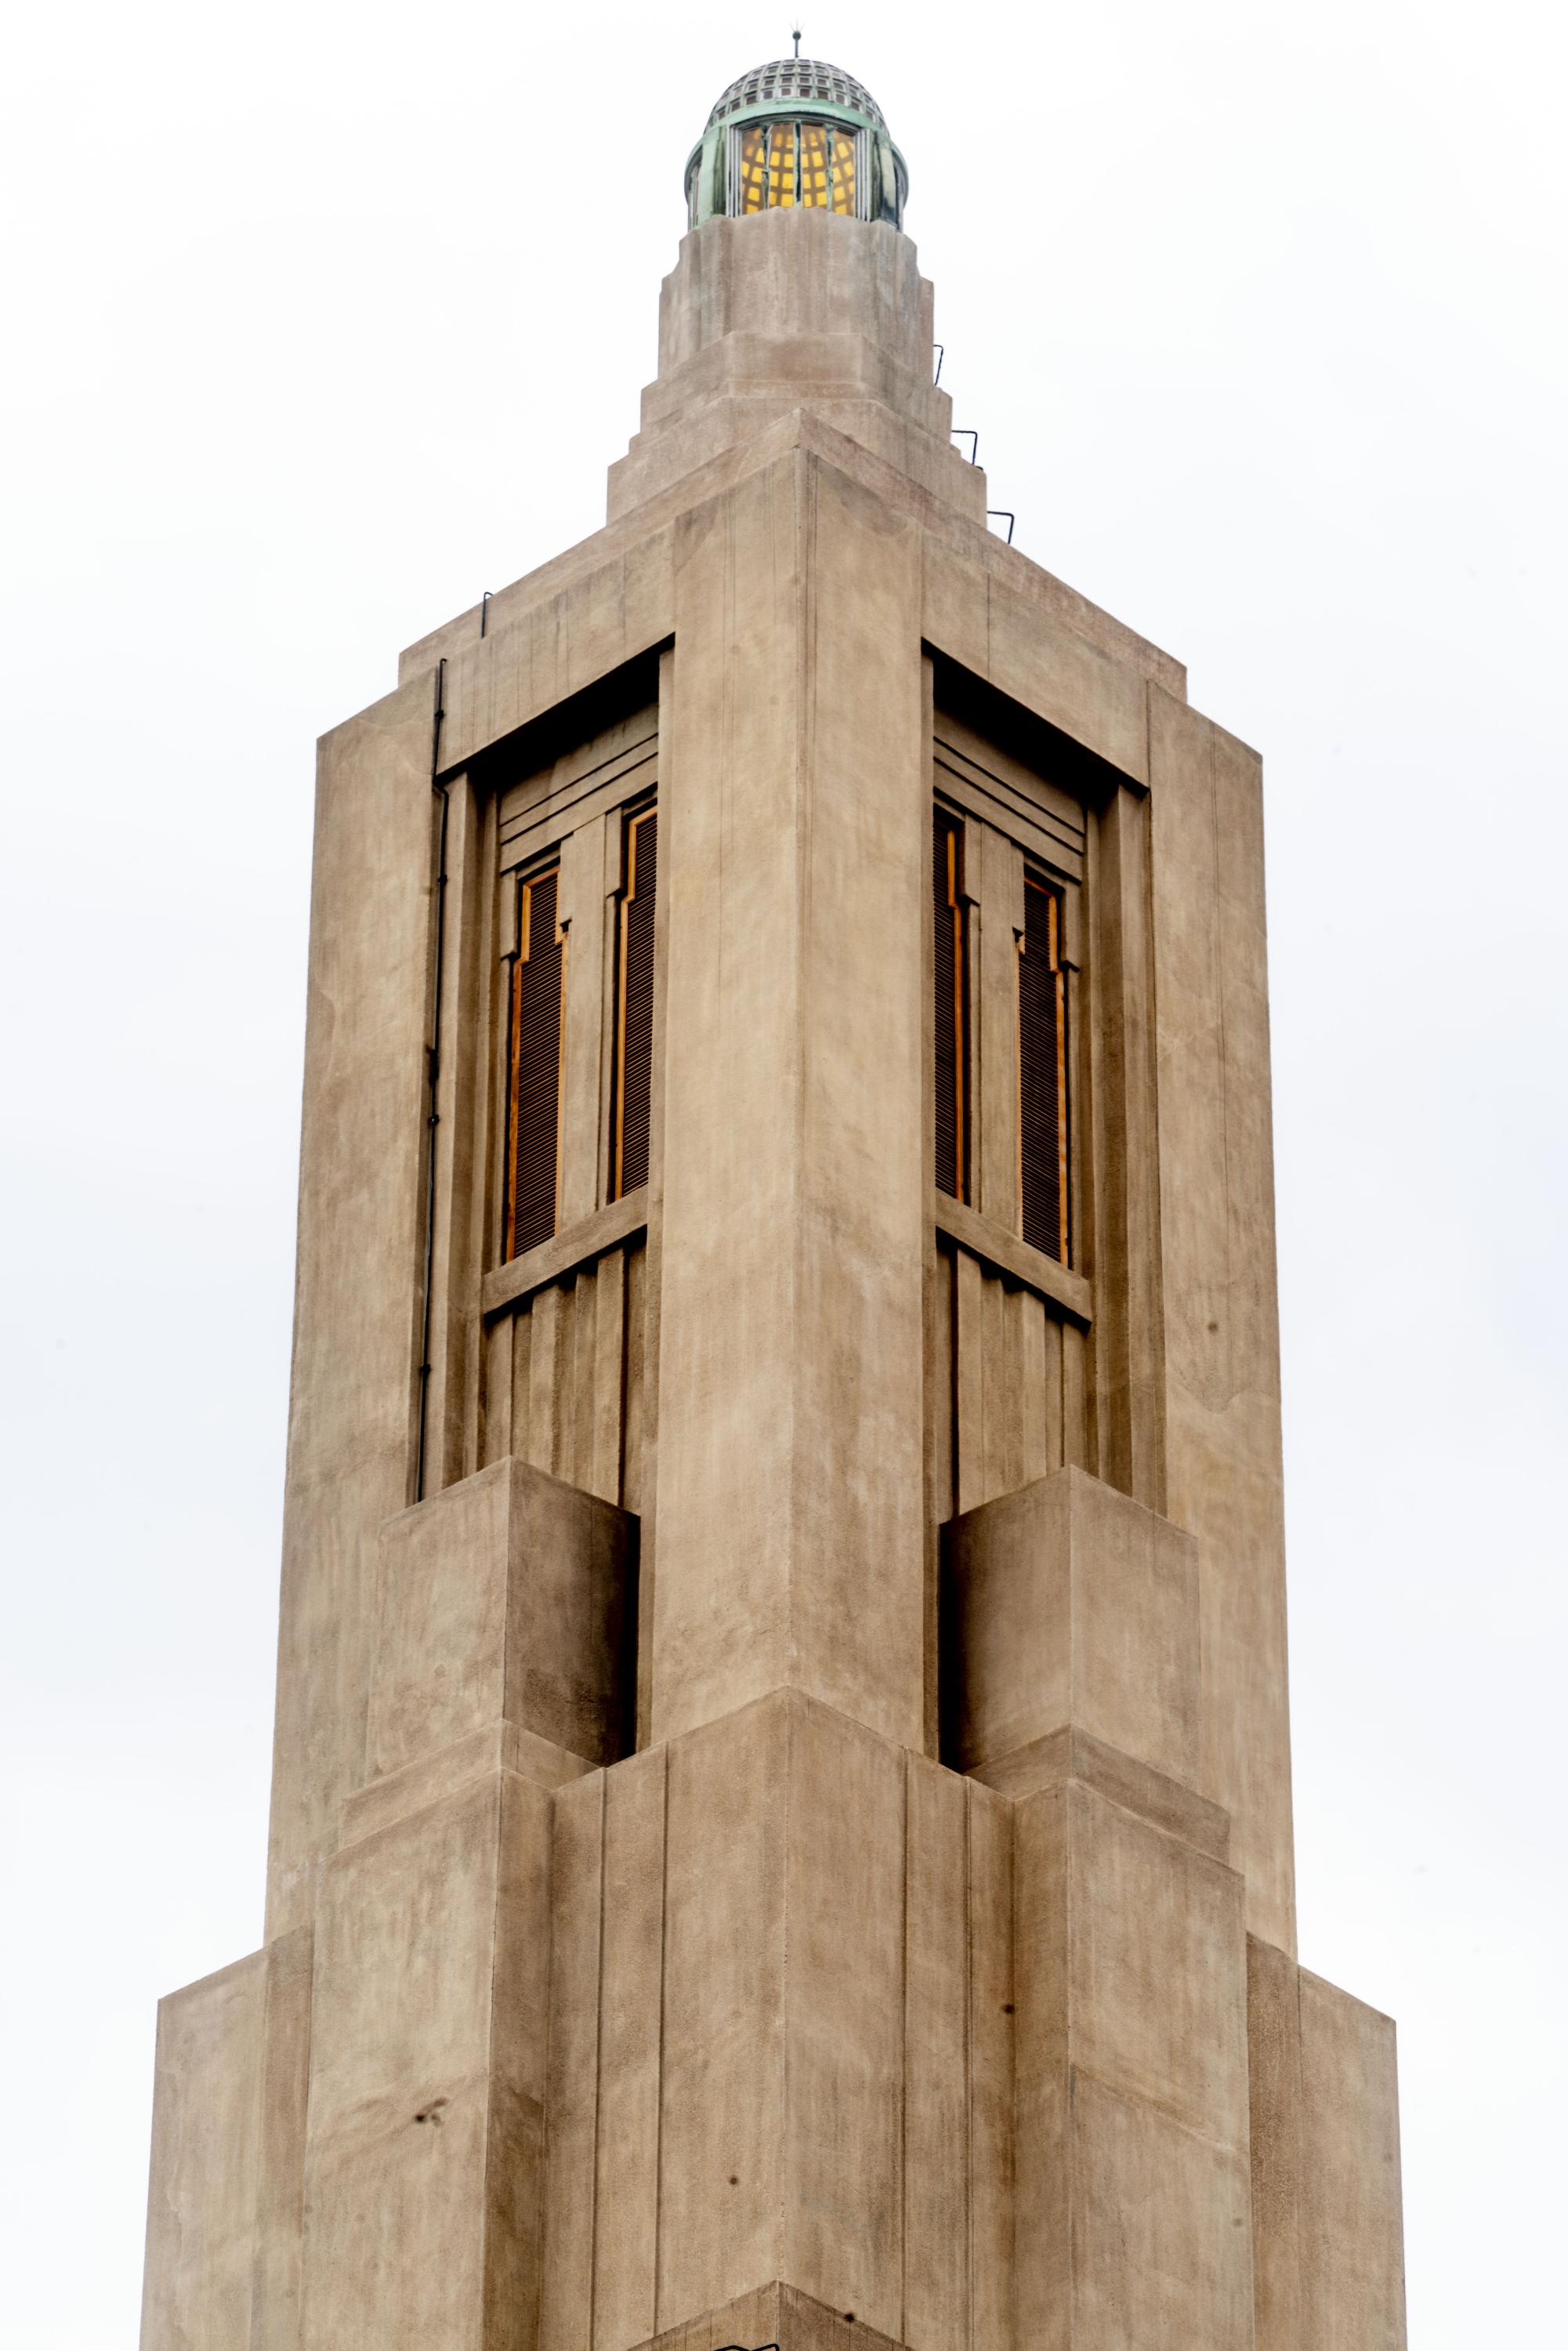 Shahmoon Irodaház tornya. Fotó: Nicky Almasy, 2019